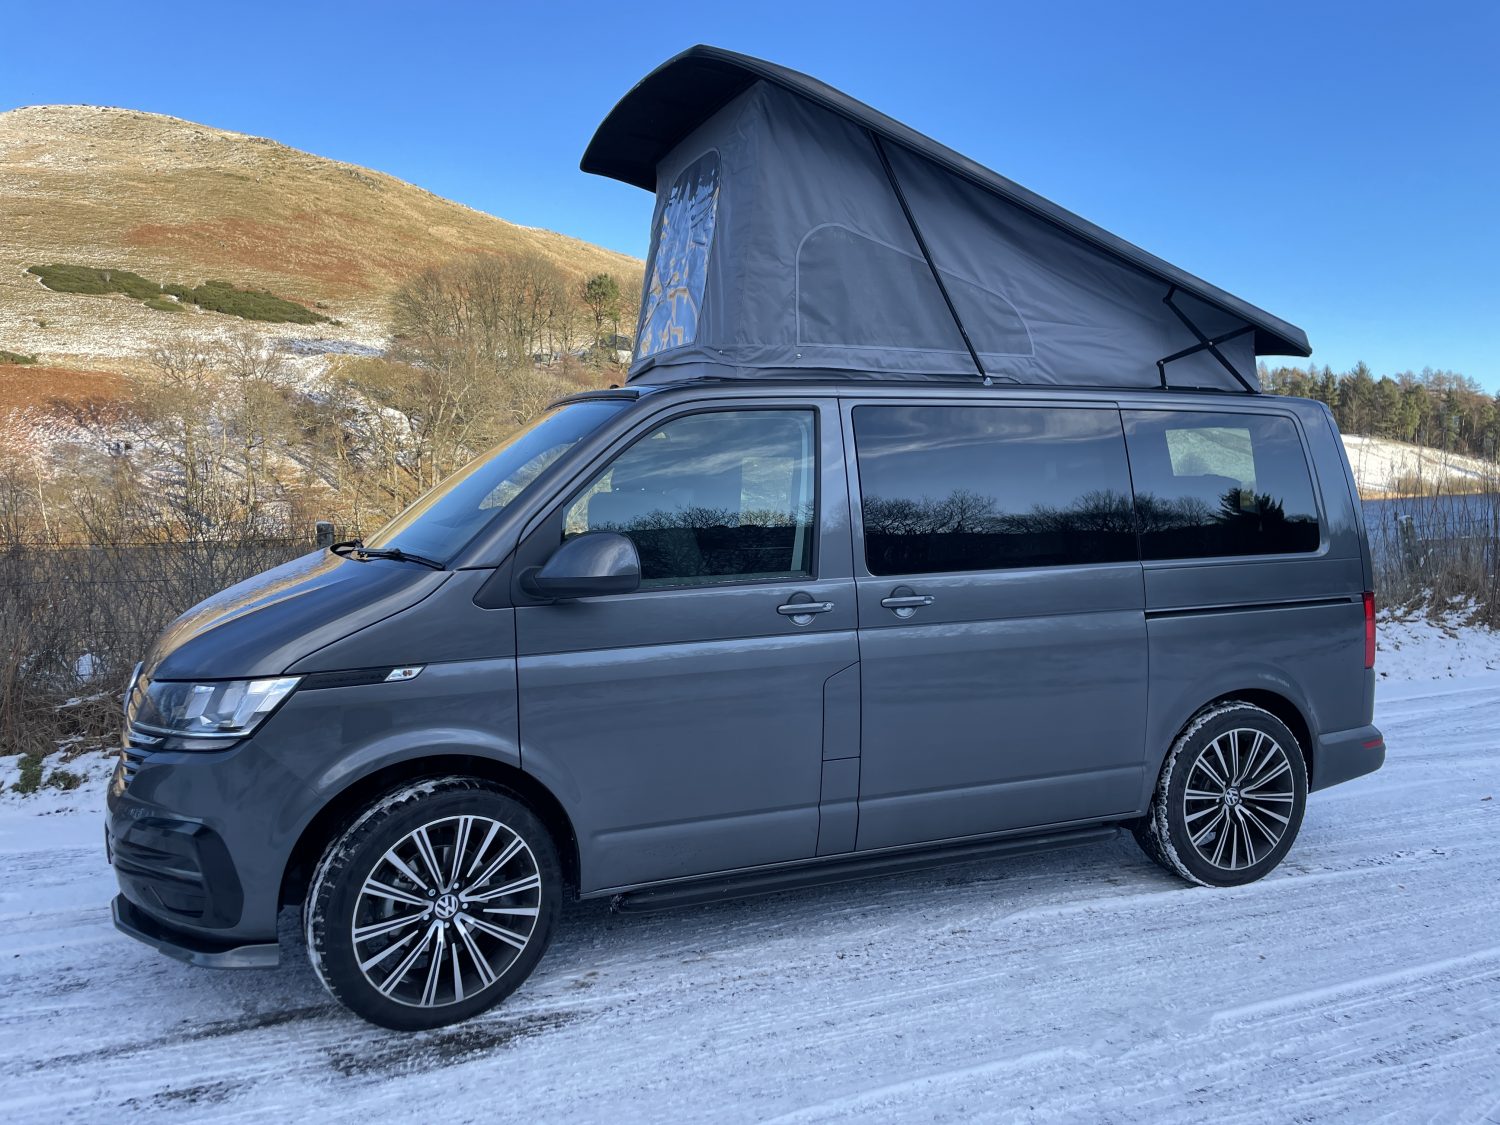 VW Campervan Hire Scotland